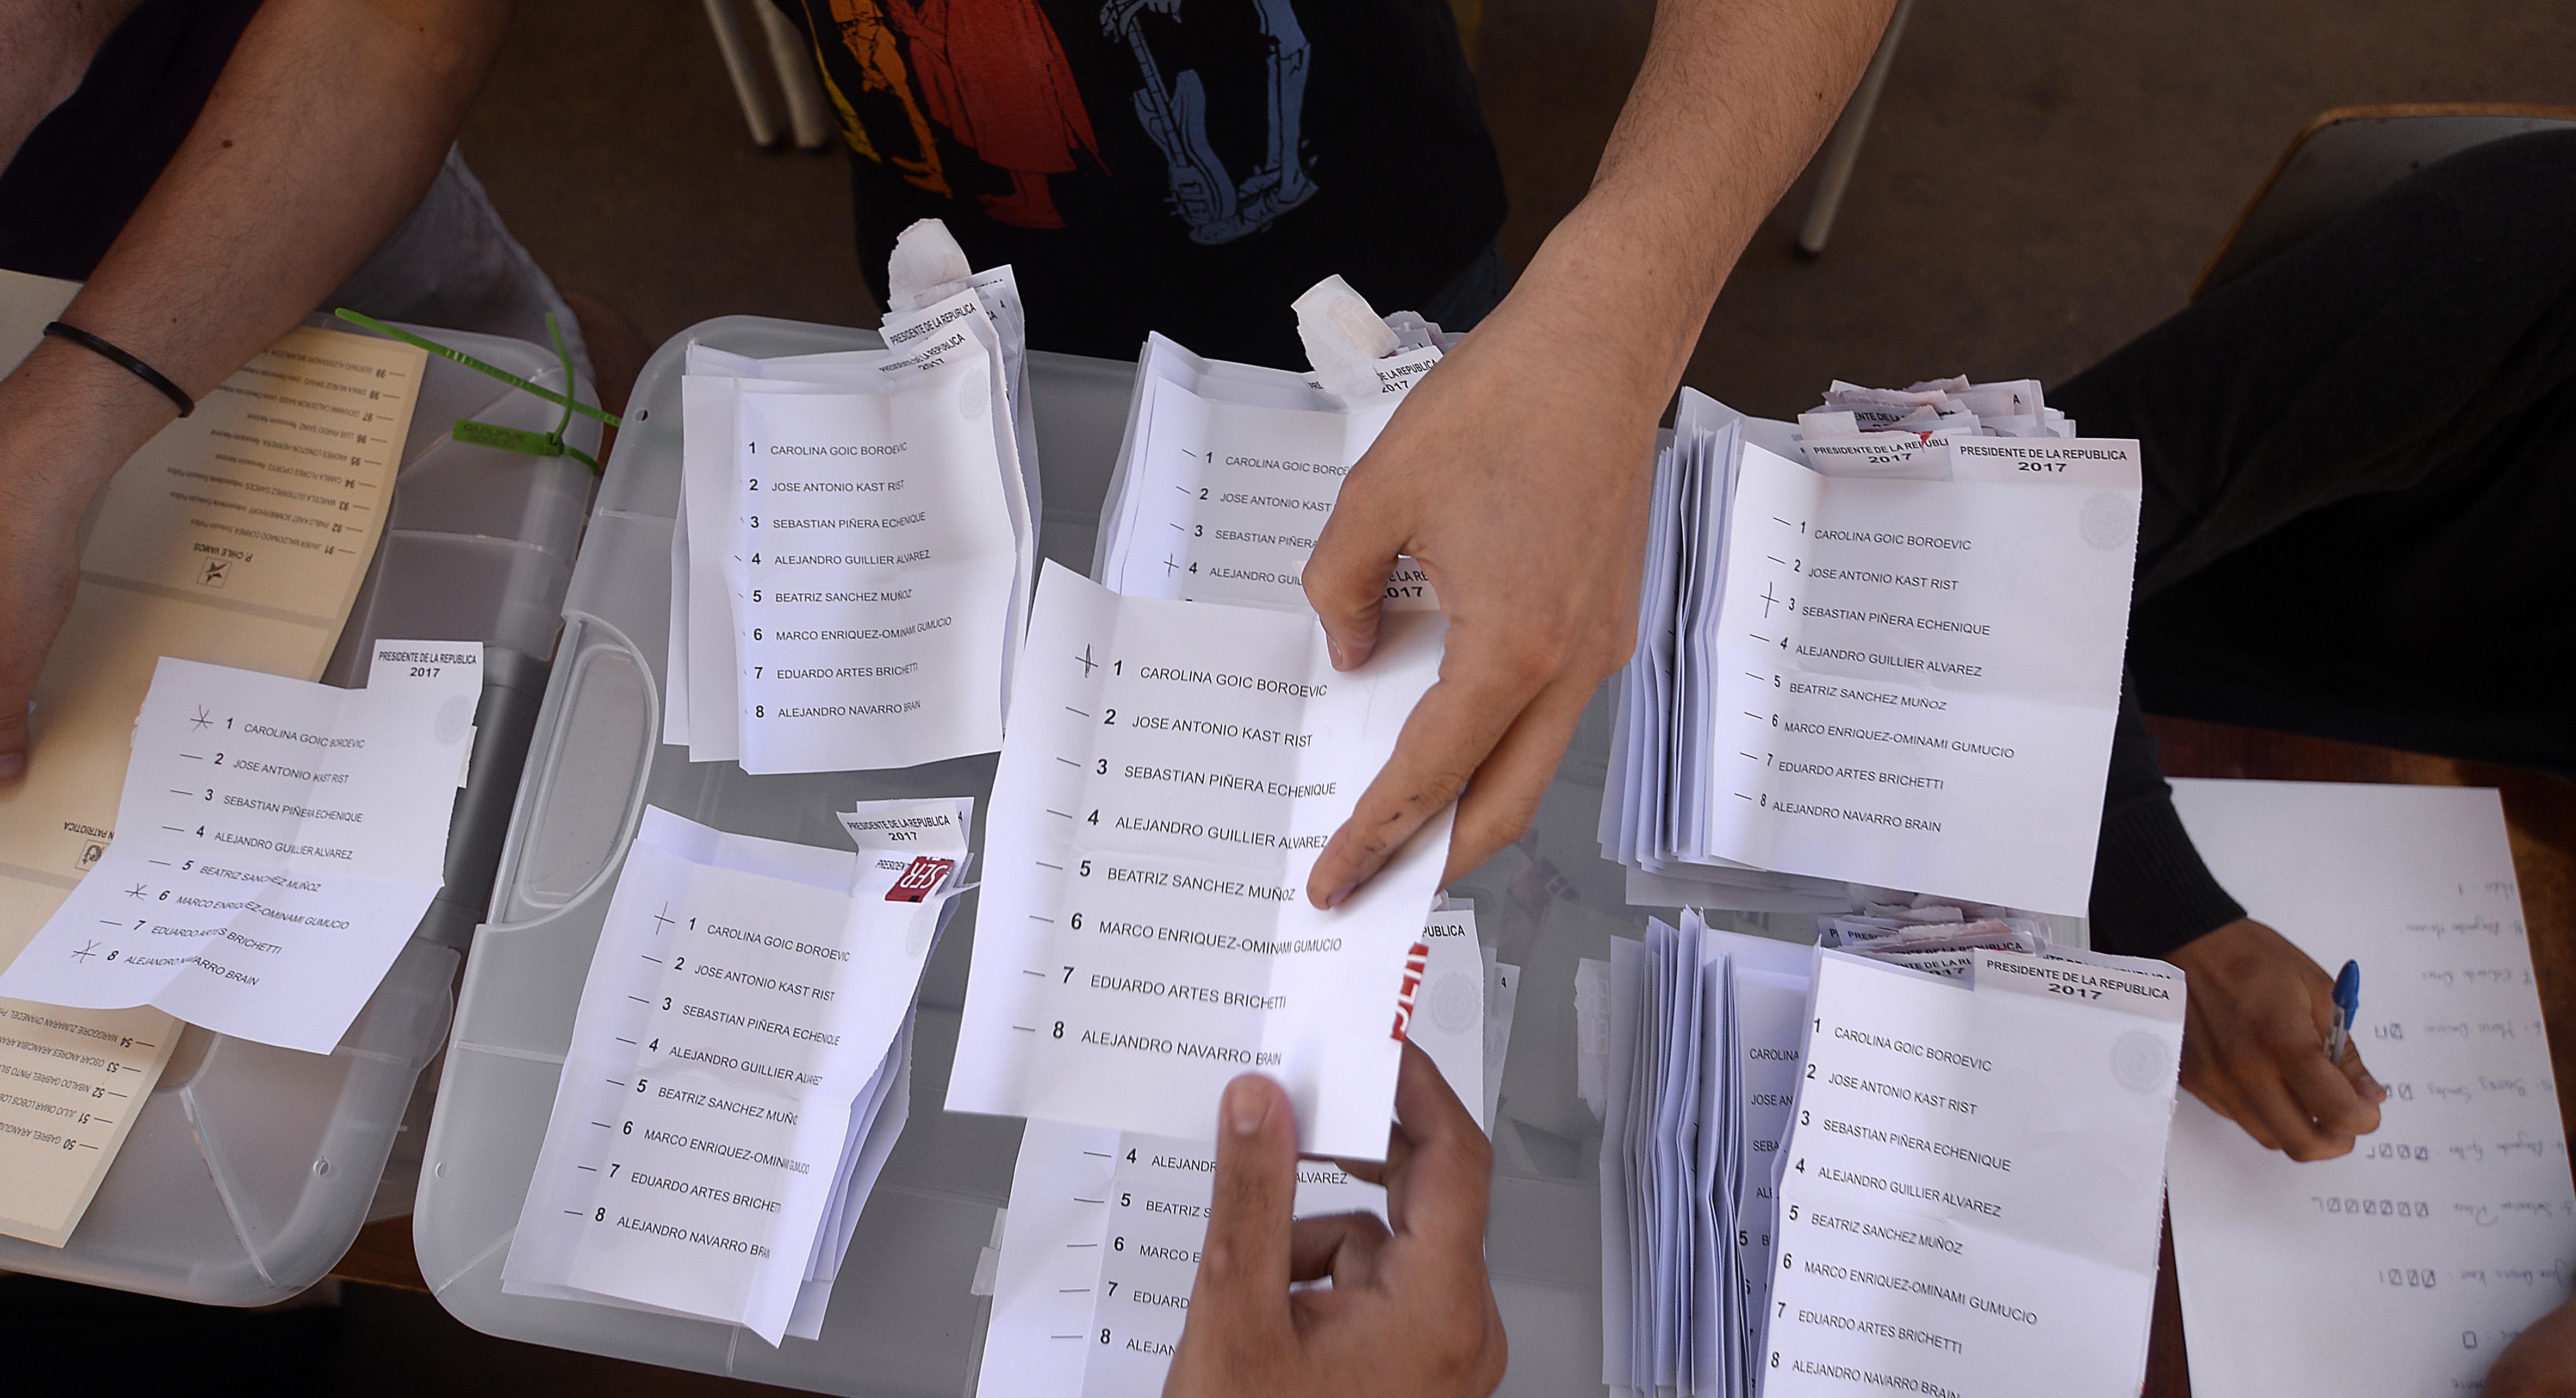 19 Noviembre 2017 / VALPARAISO Conteo de Votos de los candidatos